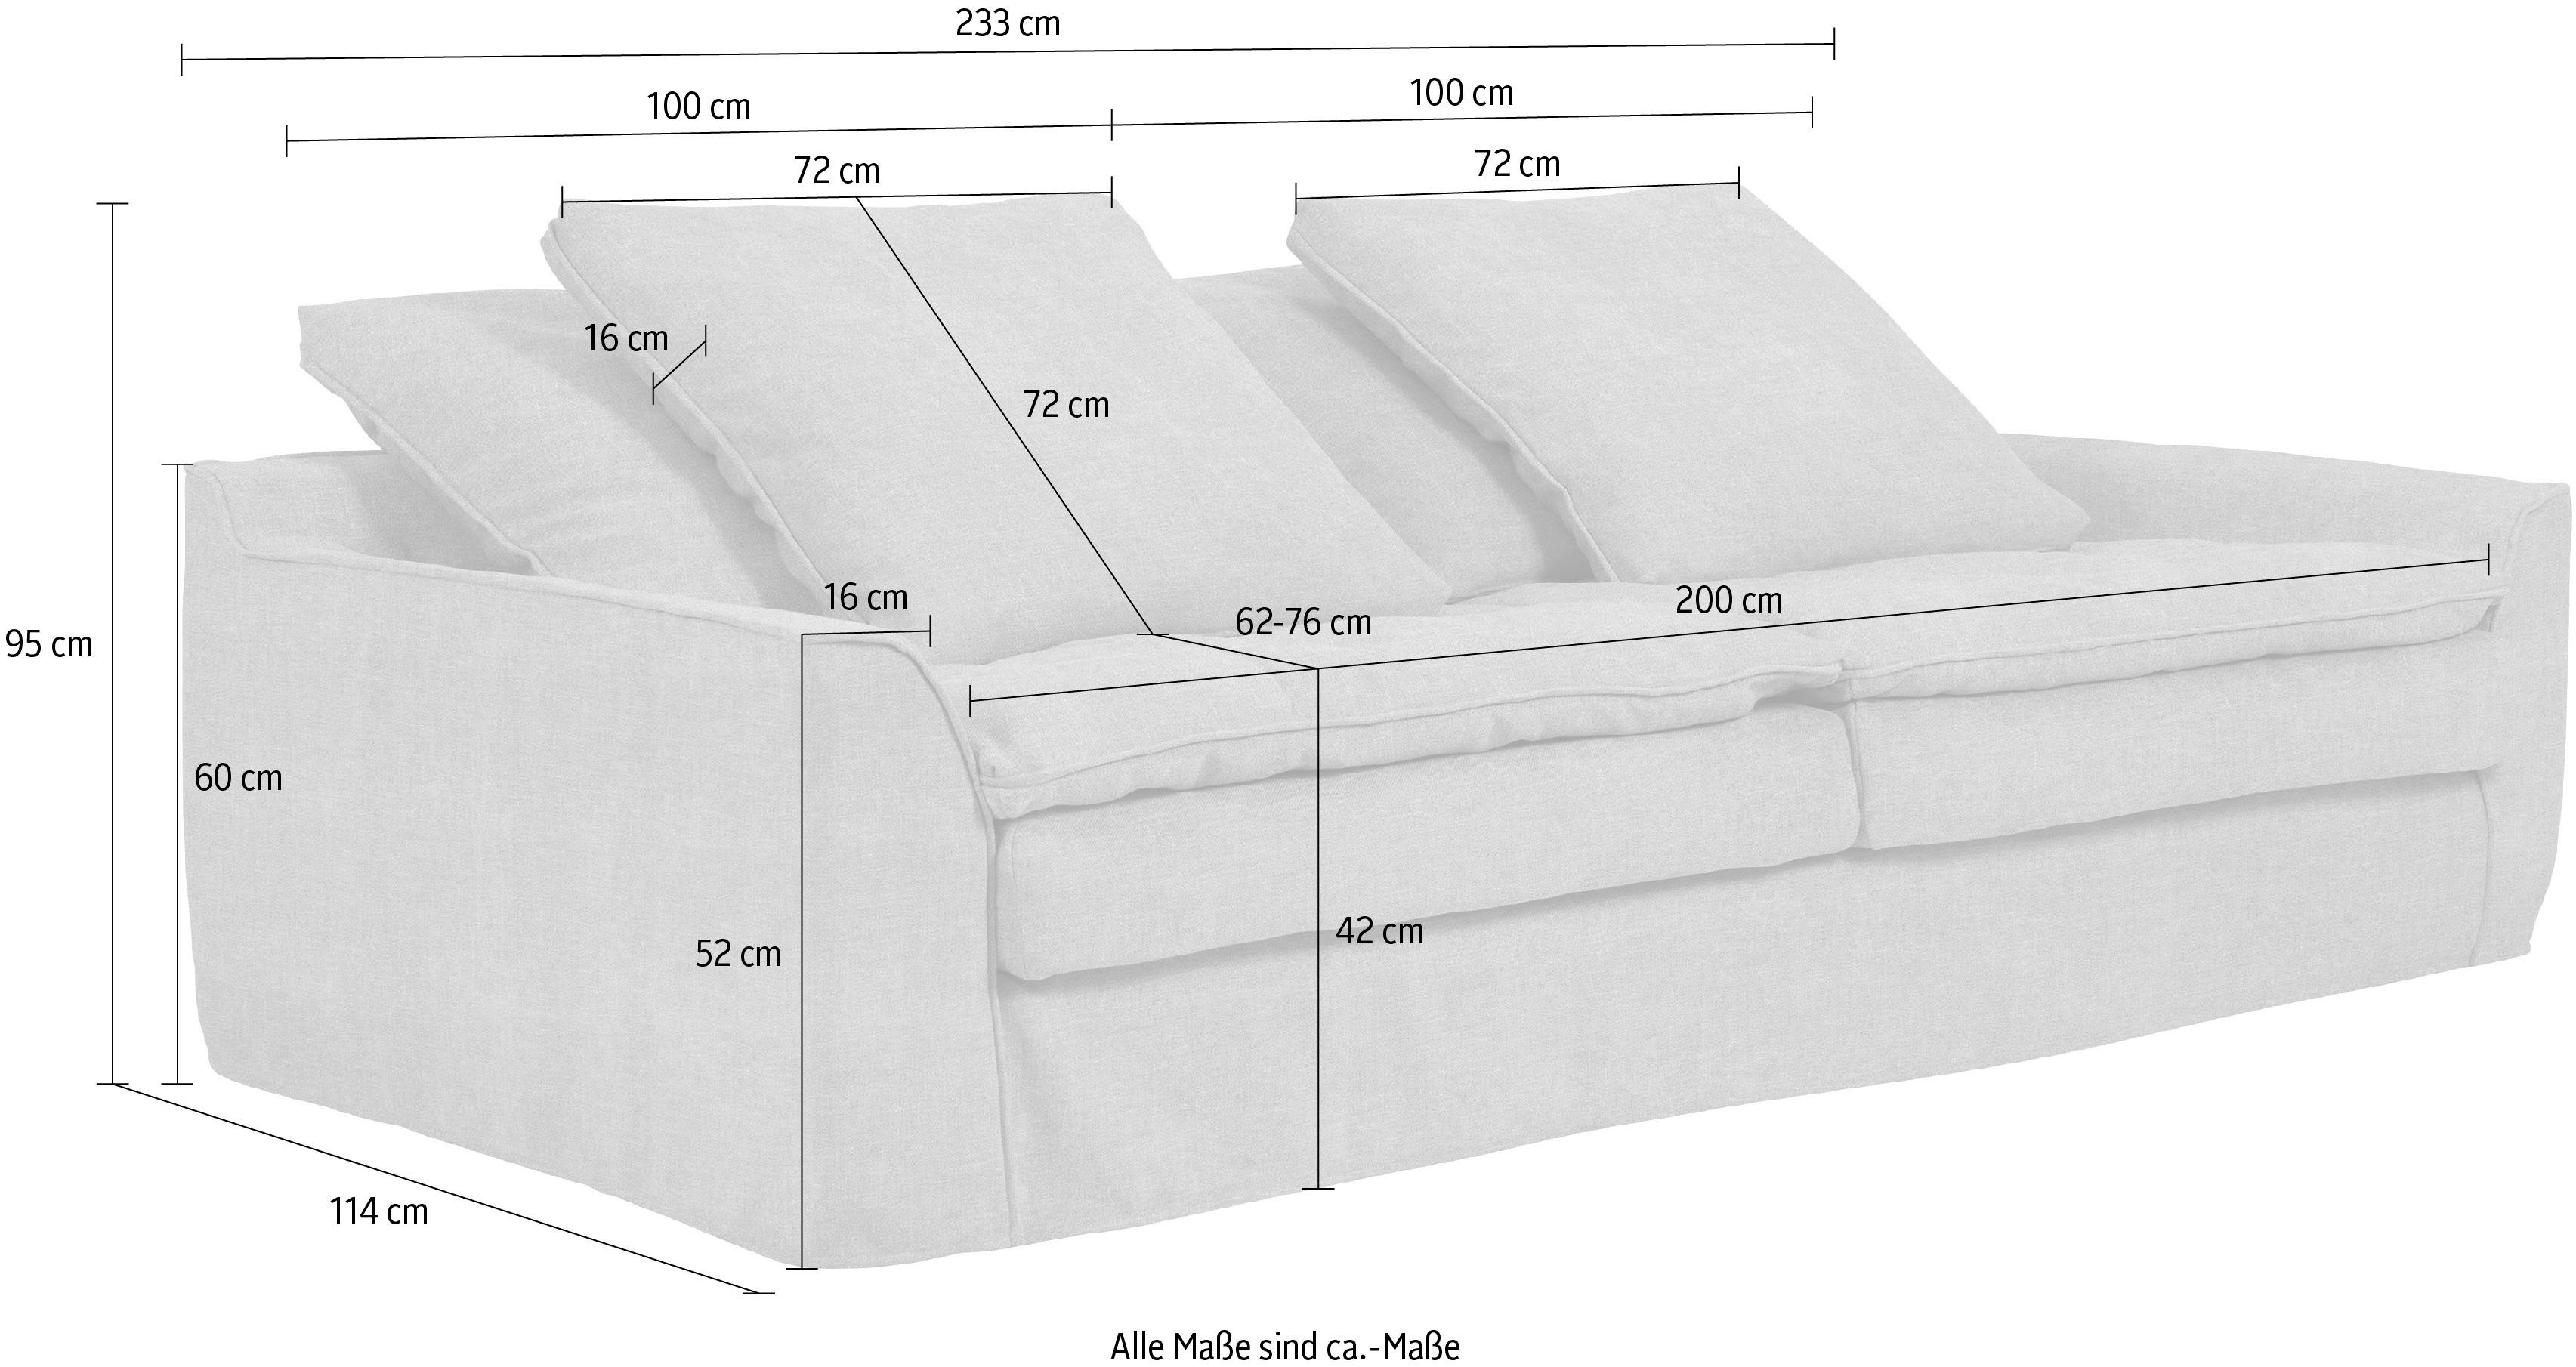 furninova Big-Sofa waschbarer abnehmbarer 4 und inklusive Hussenbezug Kissen, Sake